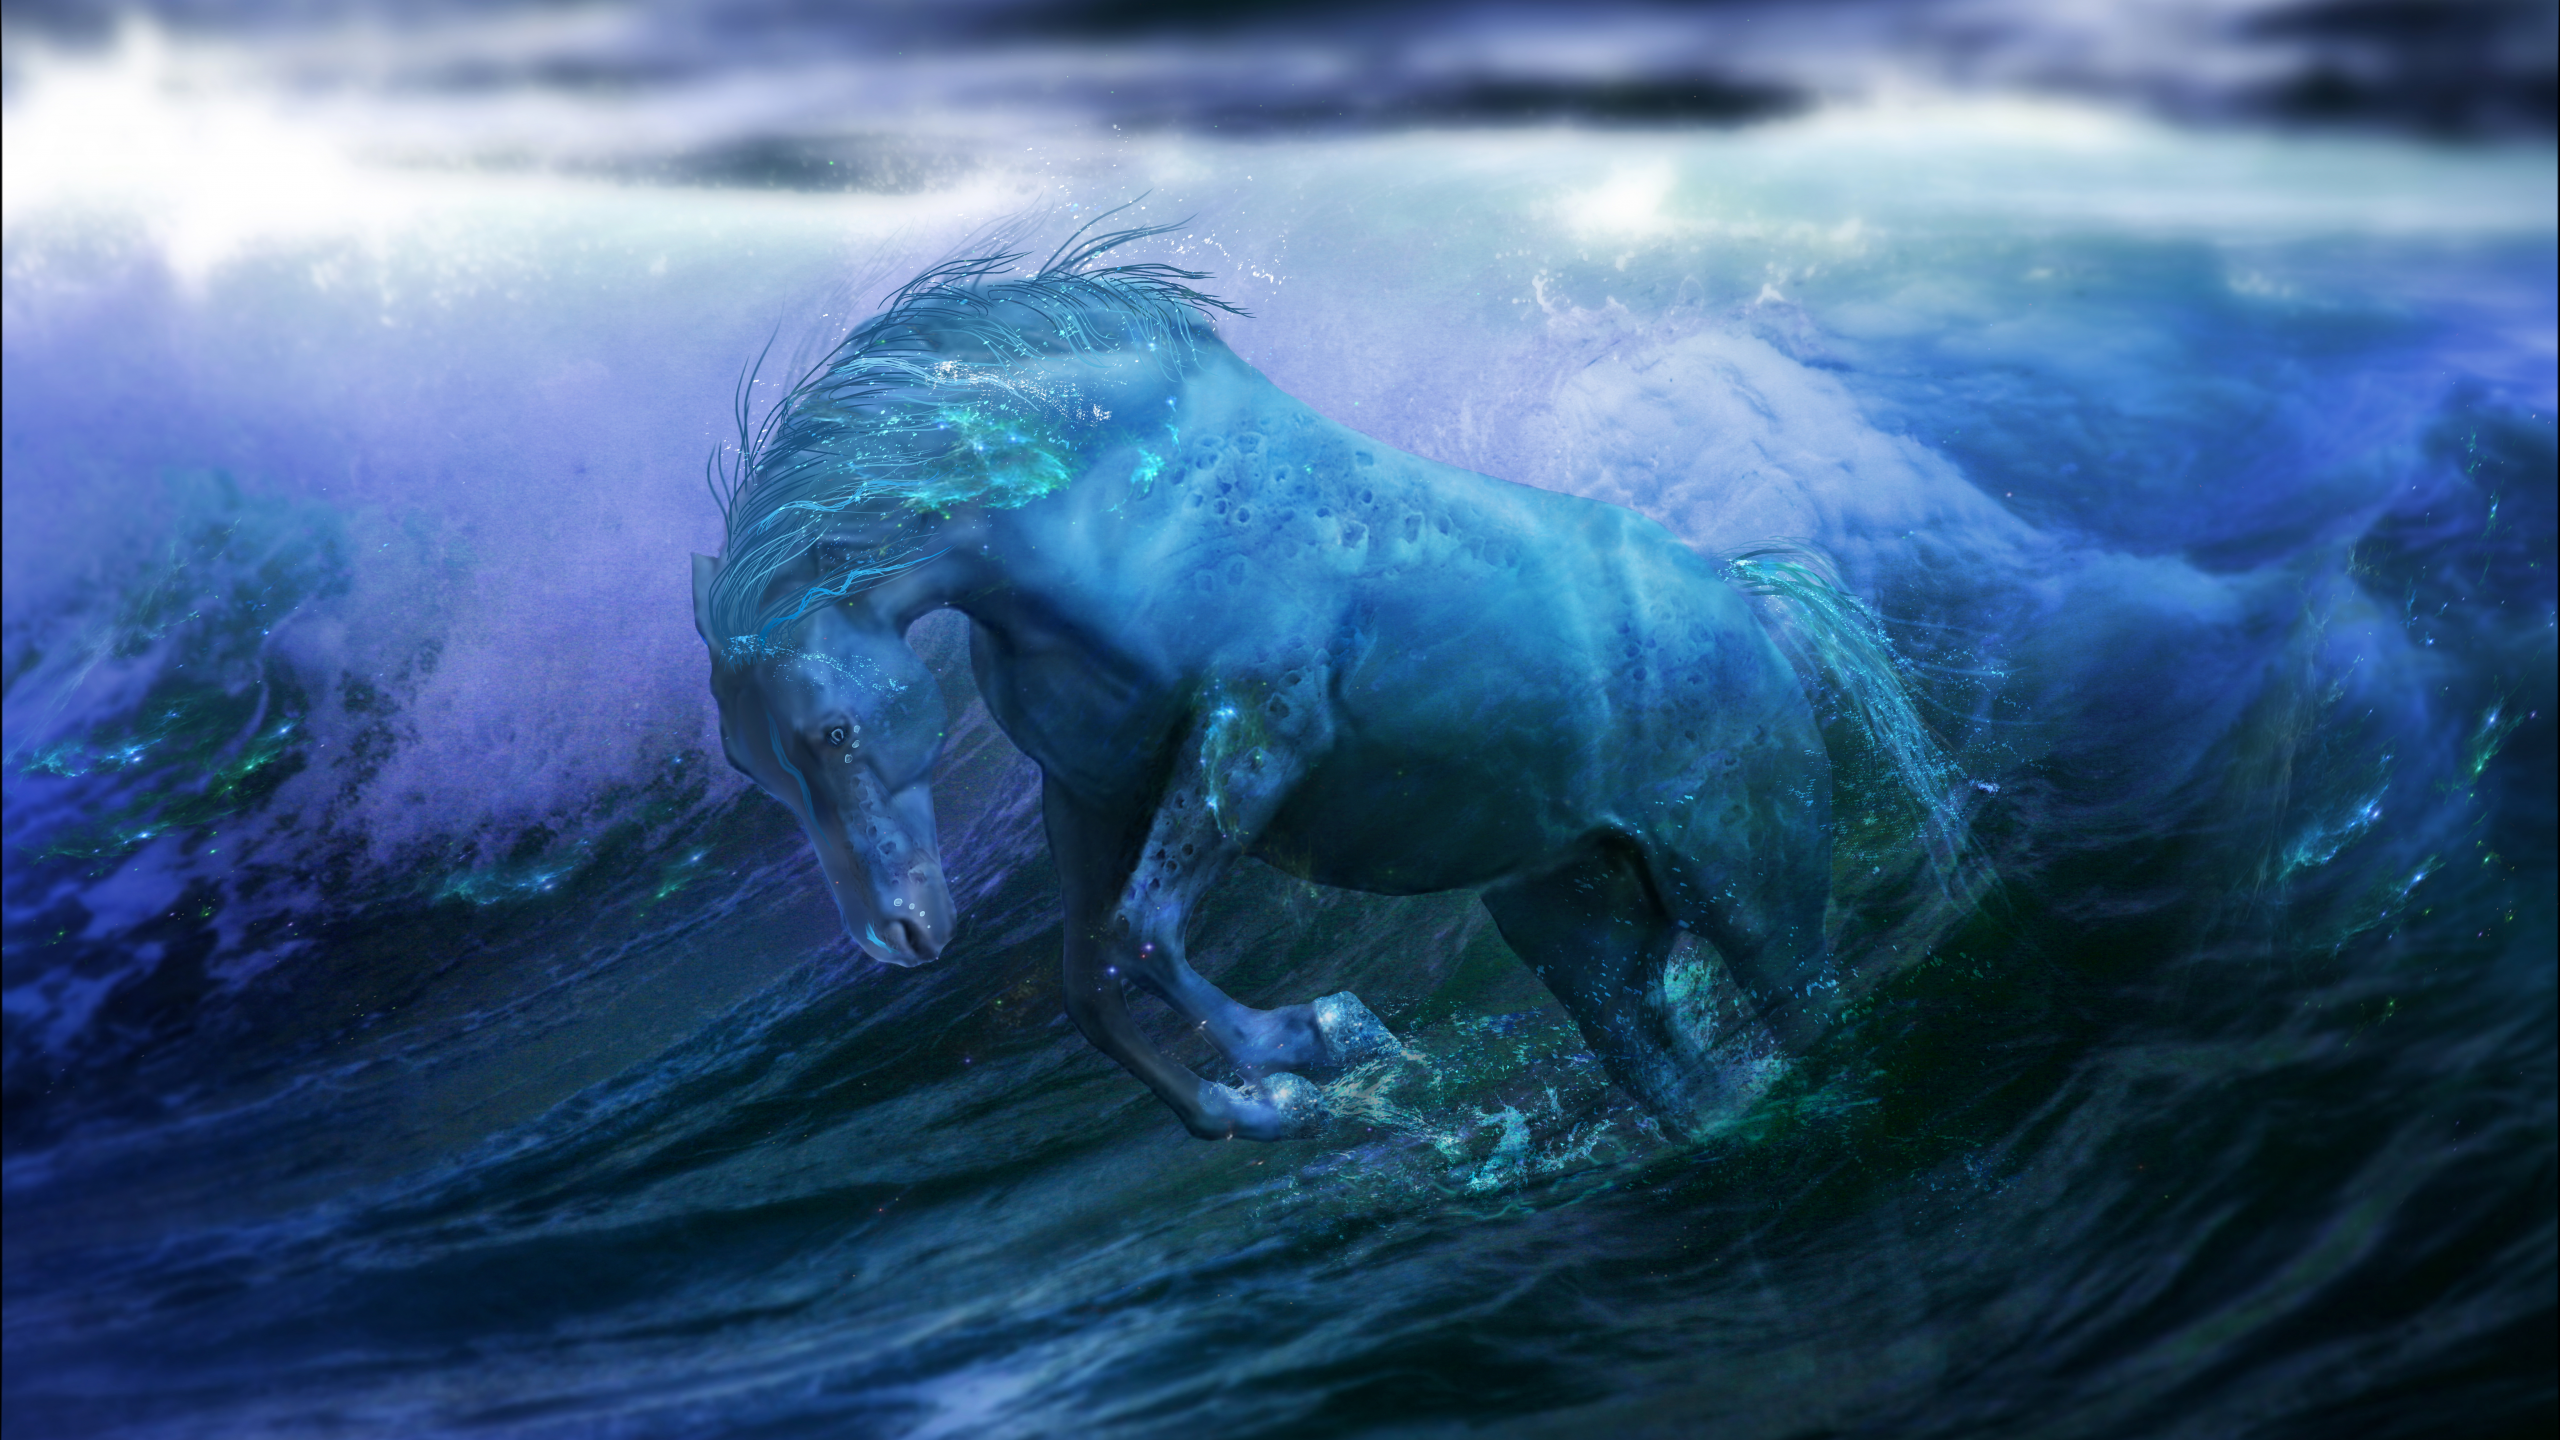 вода, ocean, fantasy, water, океан, лошадь, horse